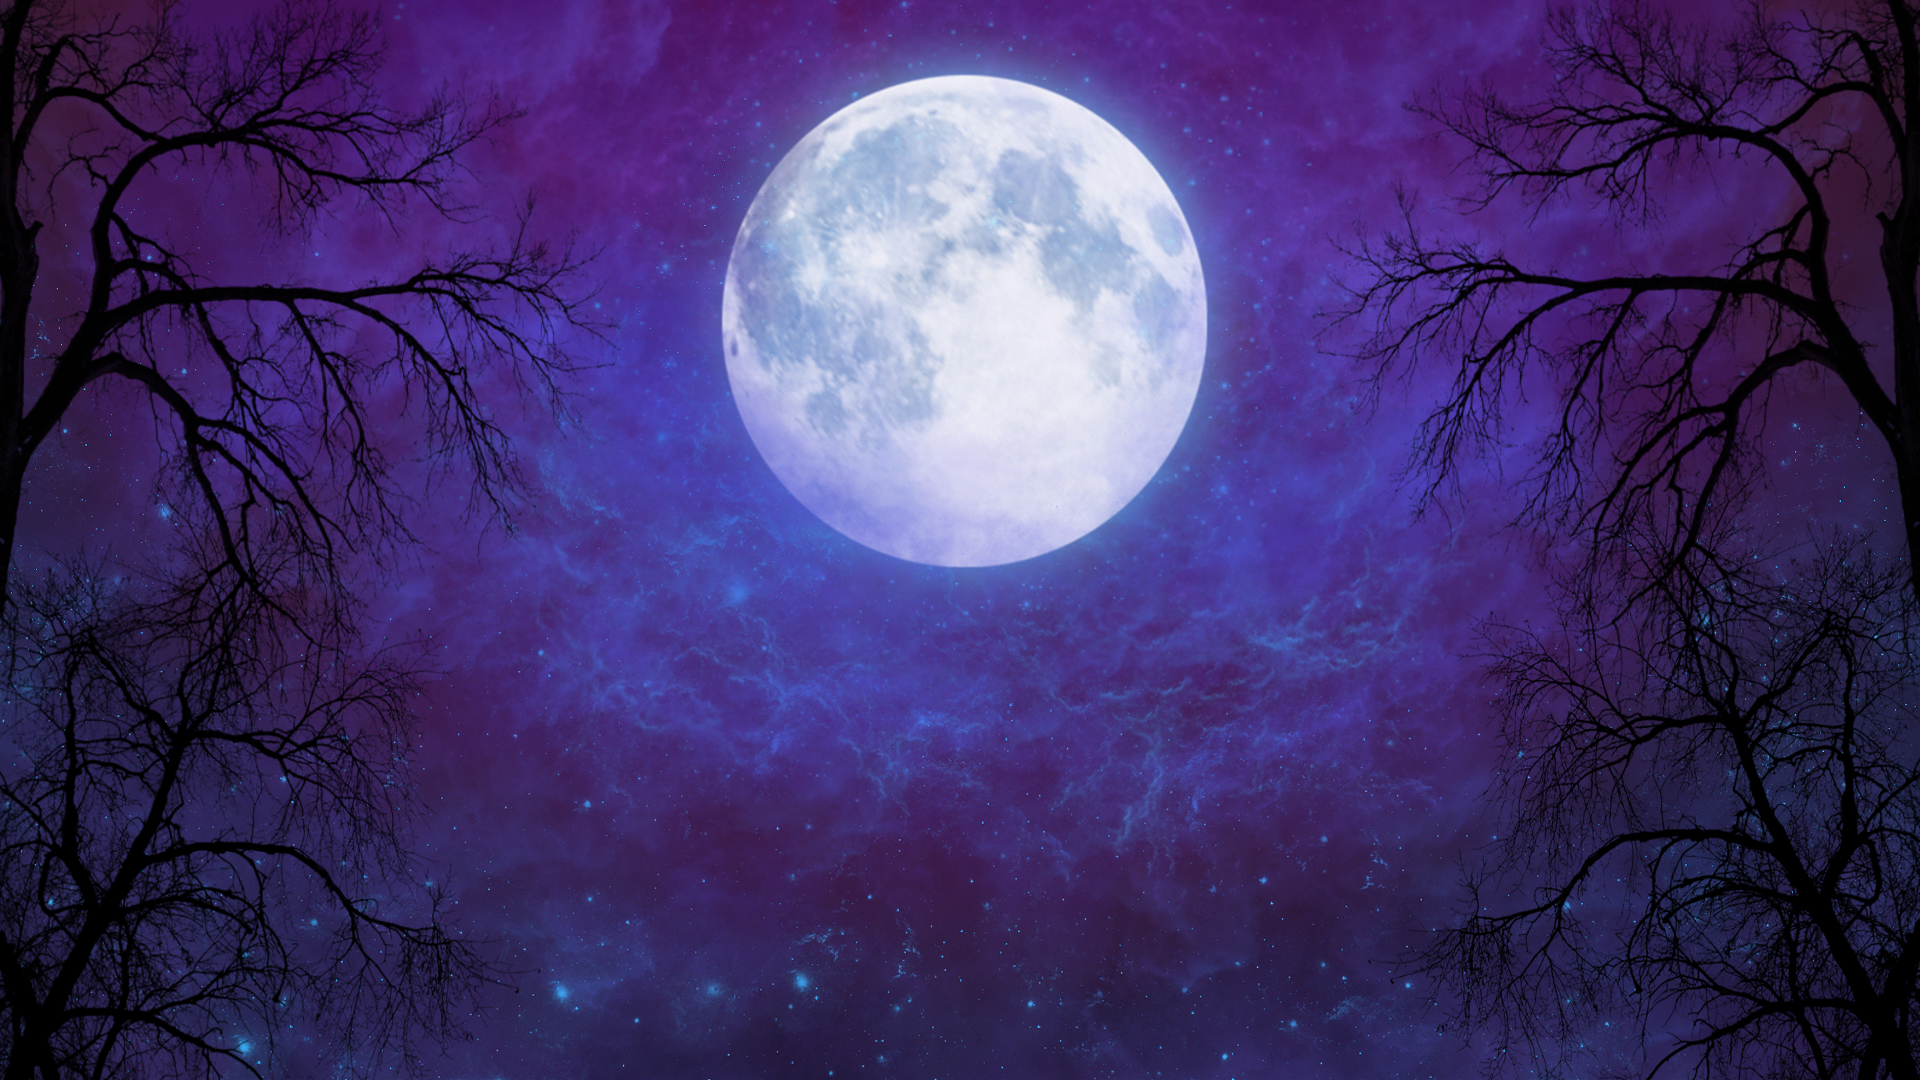 Artistic Full Moon in Starry Night Sky Wallpaper, HD Artist 4K